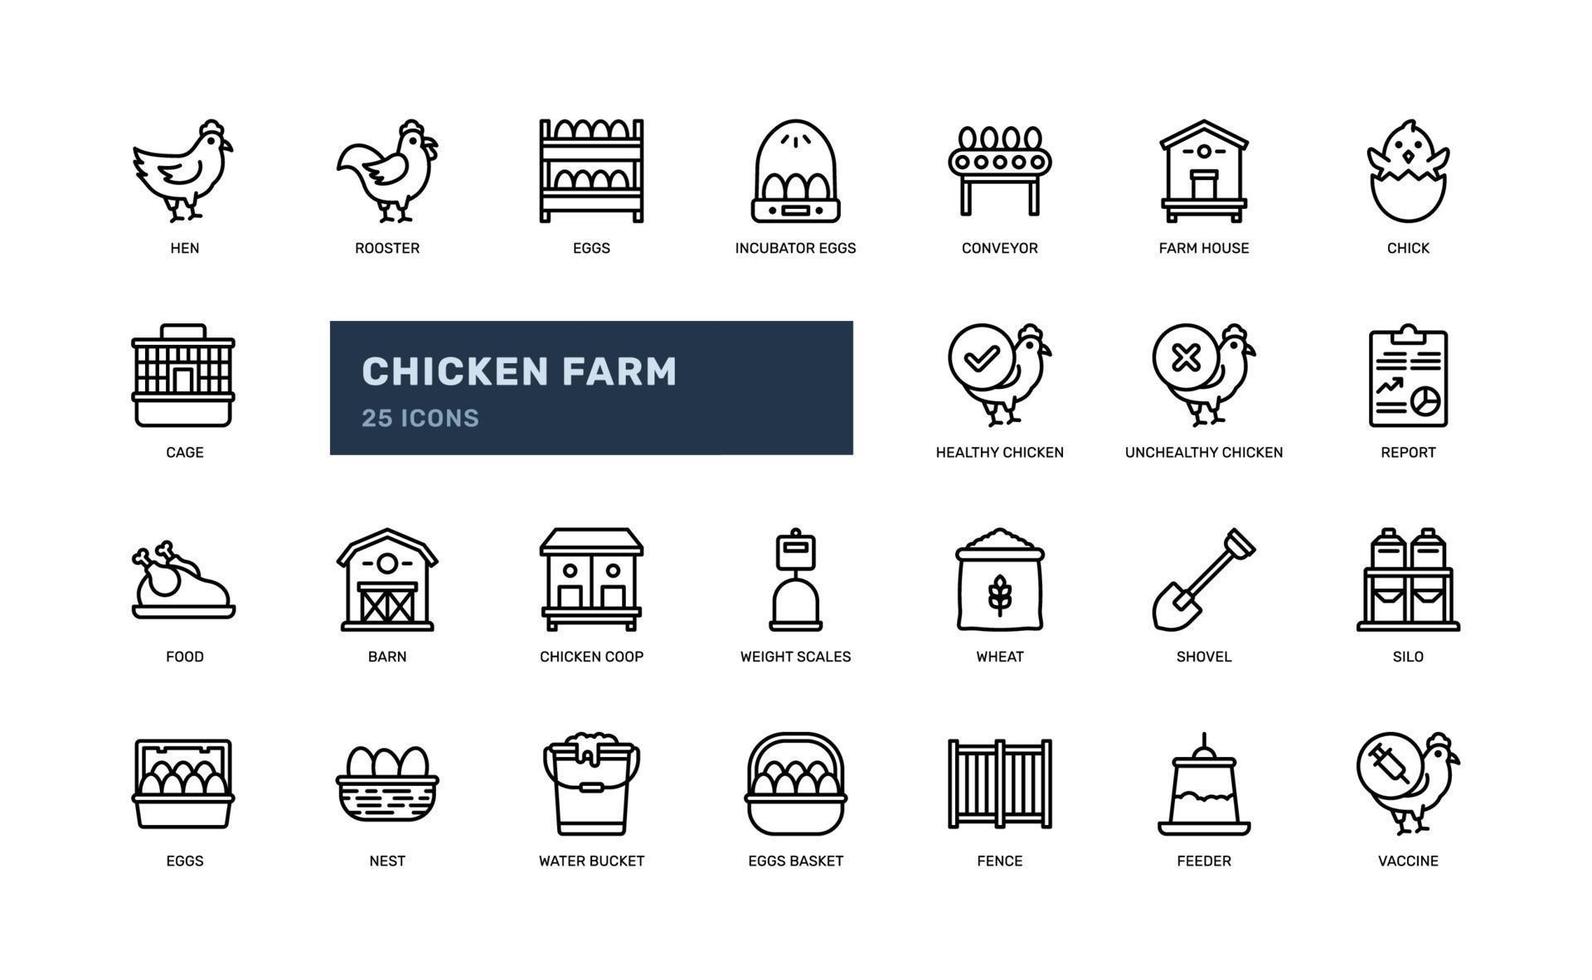 granja de huevos de pollo agricultura aves icono de esquema detallado con gallina, gallo, comedero, pollito. ilustración vectorial sencilla vector